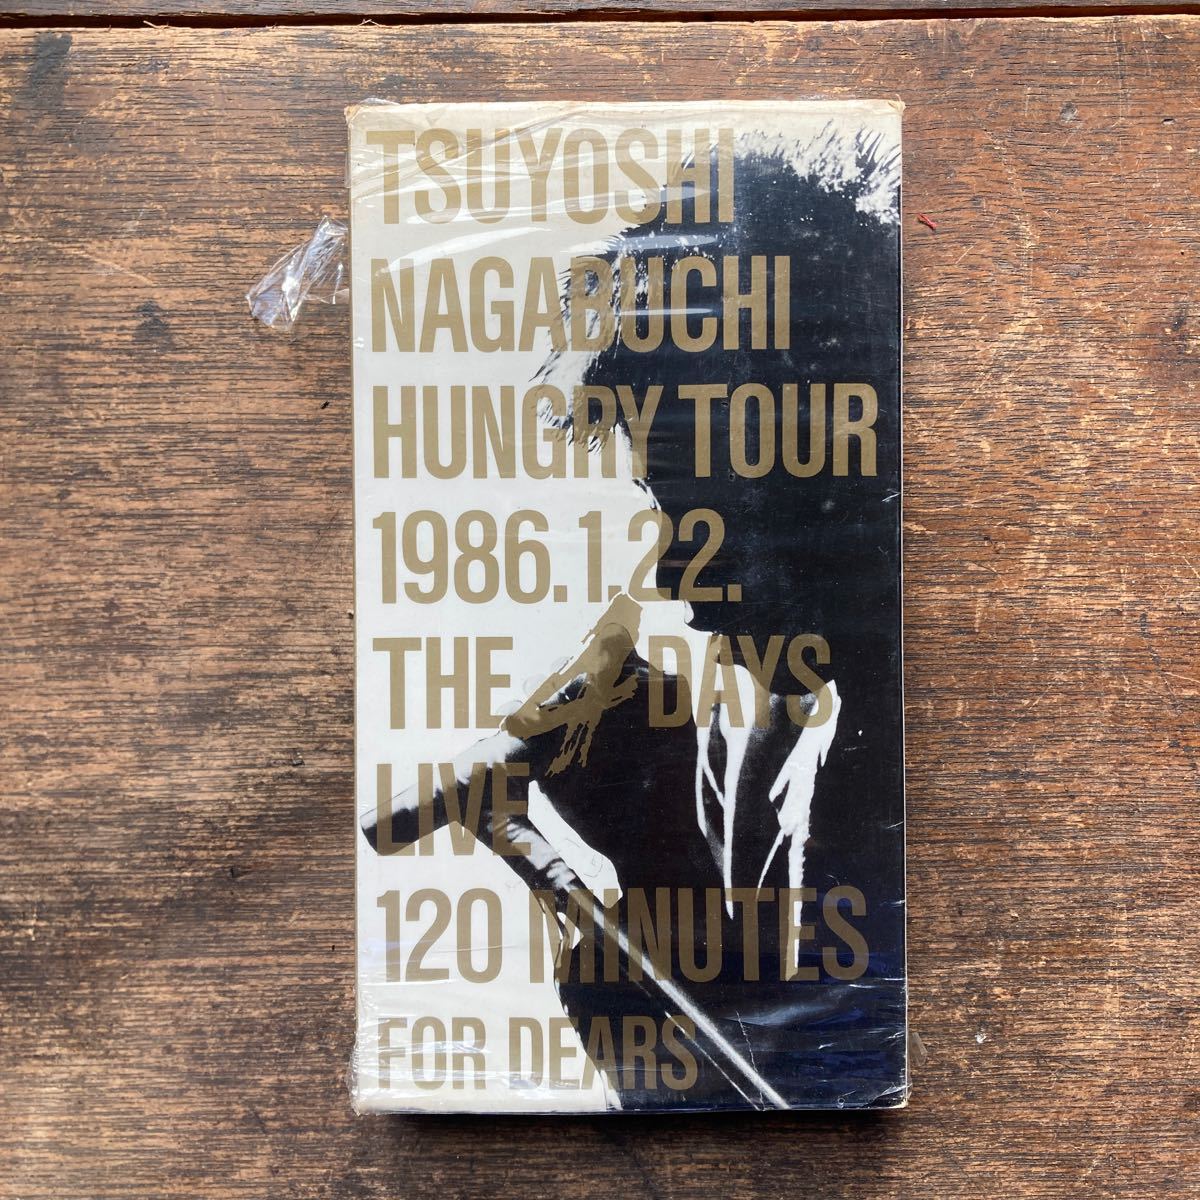  rare VHS Nagabuchi Tsuyoshi fan Club limited goods Tsuyoshi Club THE 4 DAYS videotape music collection 